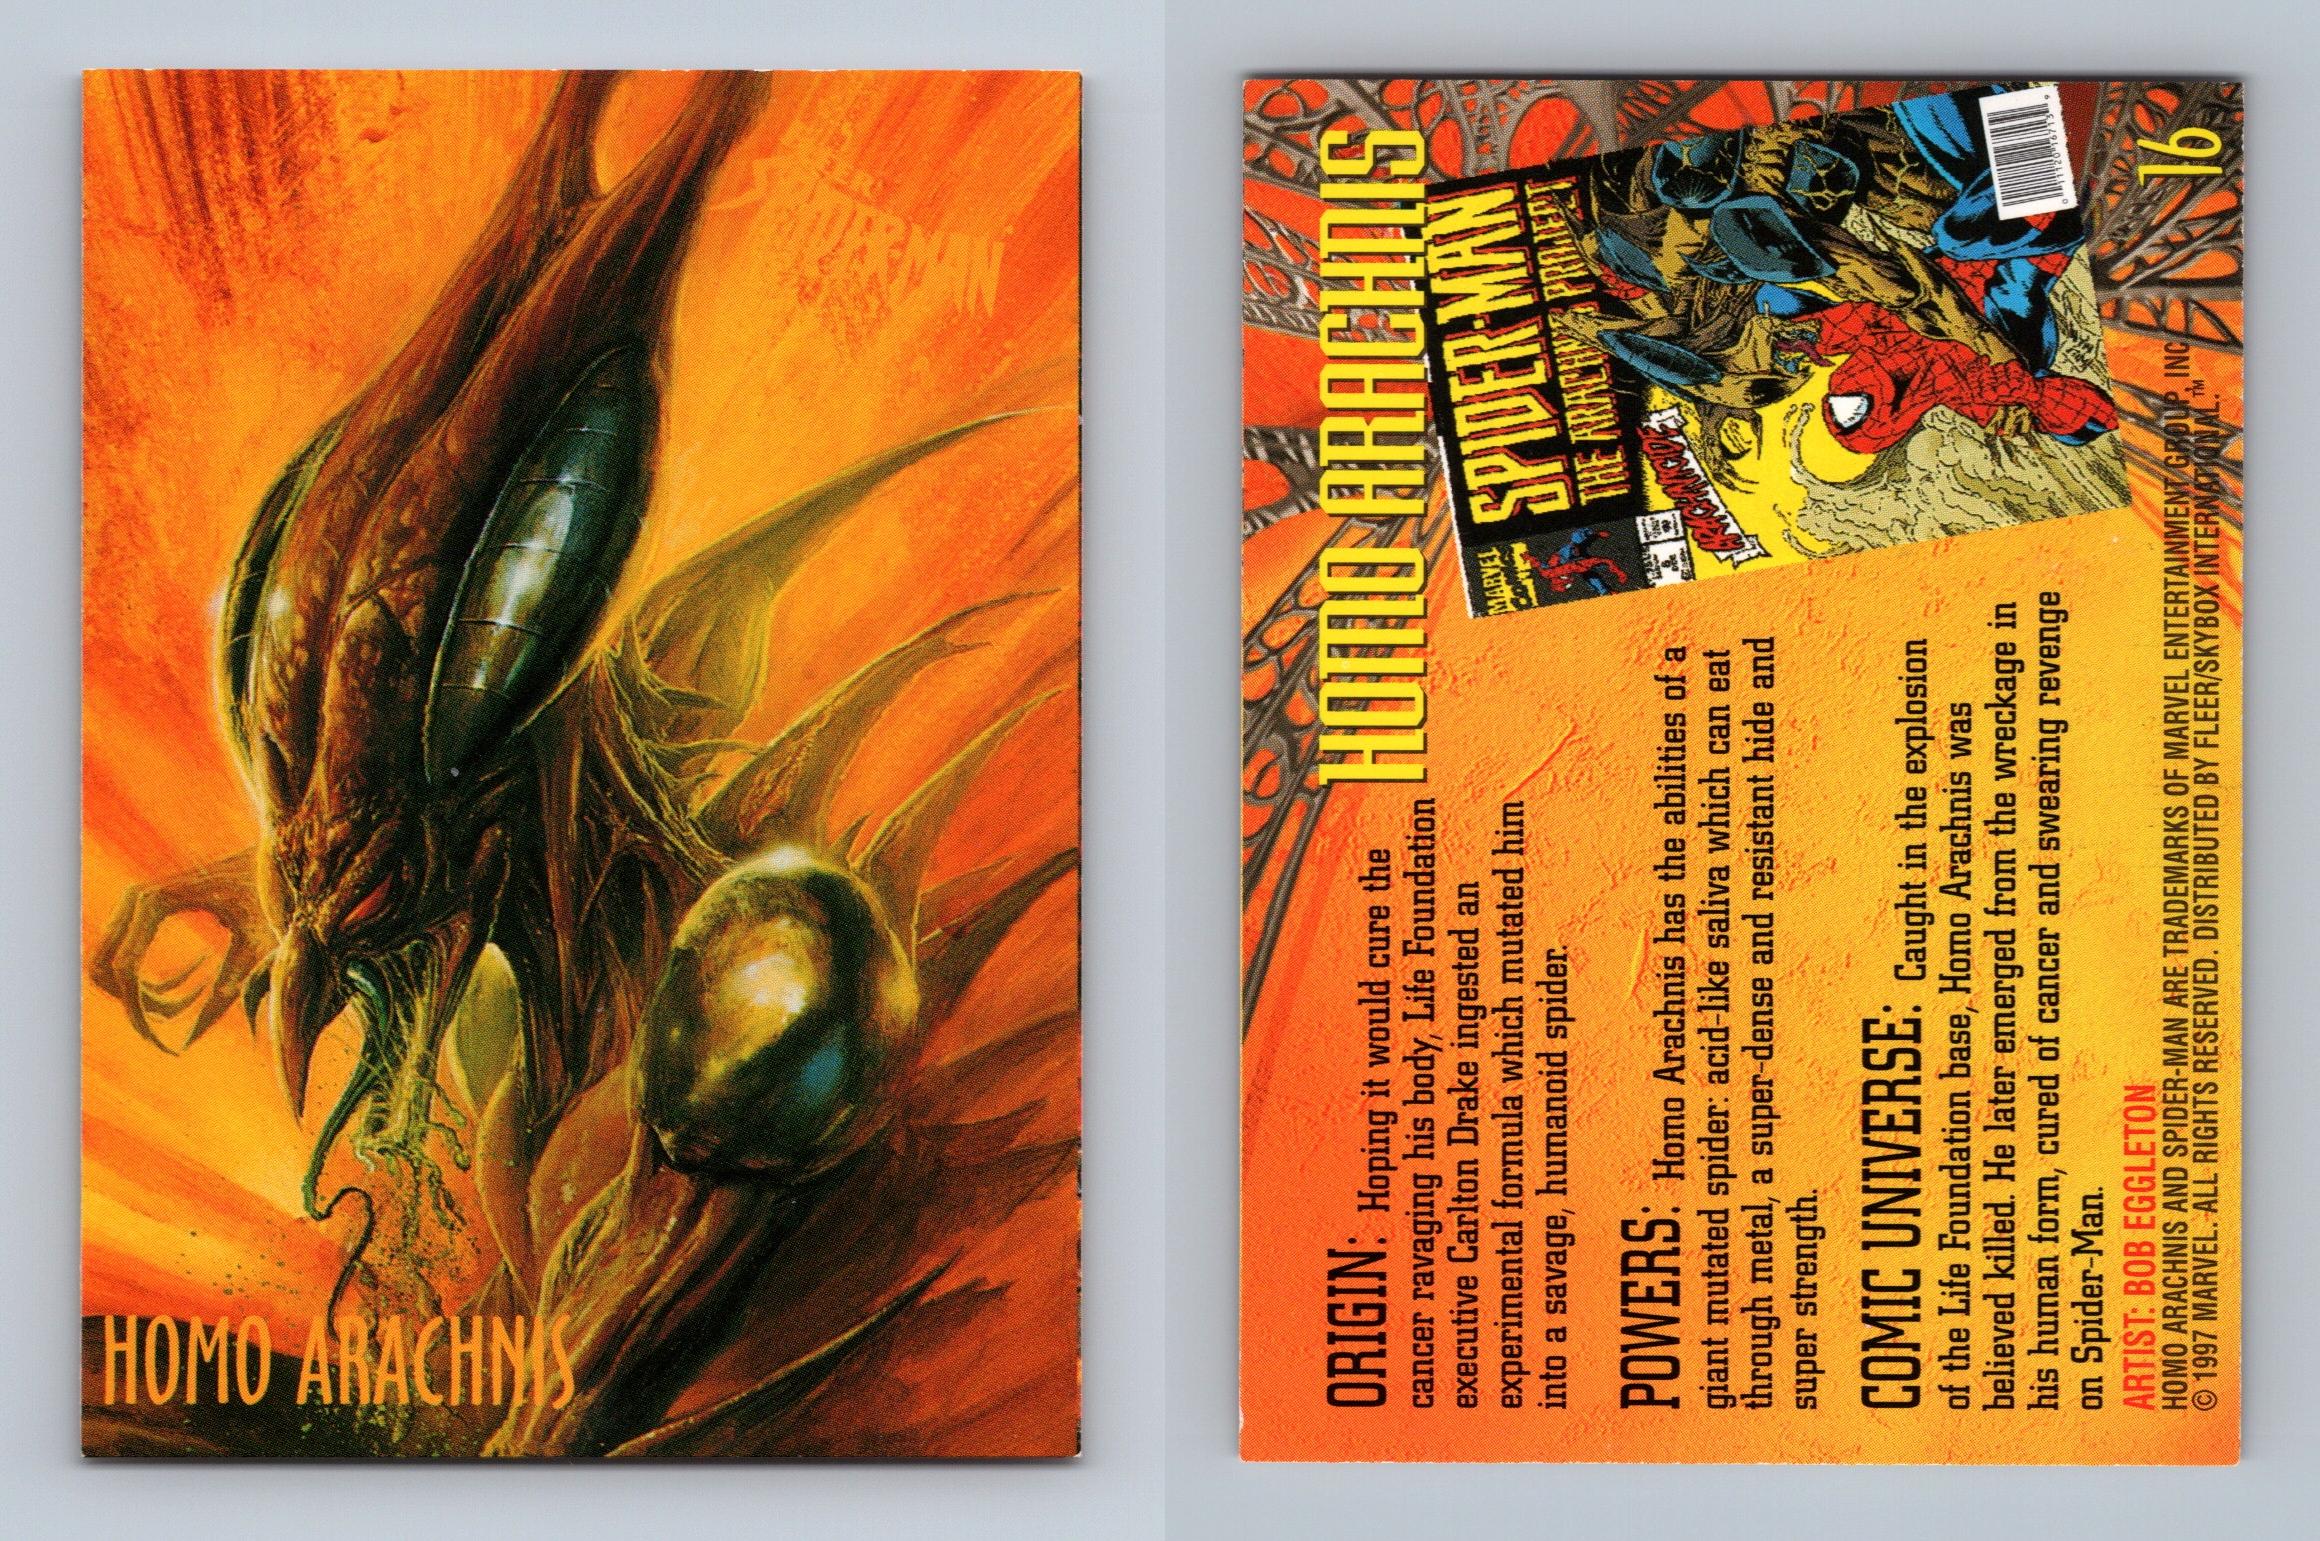 Homo Arachinis #16 Spider-Man International 1997 Fleer Trading Card - Picture 1 of 1